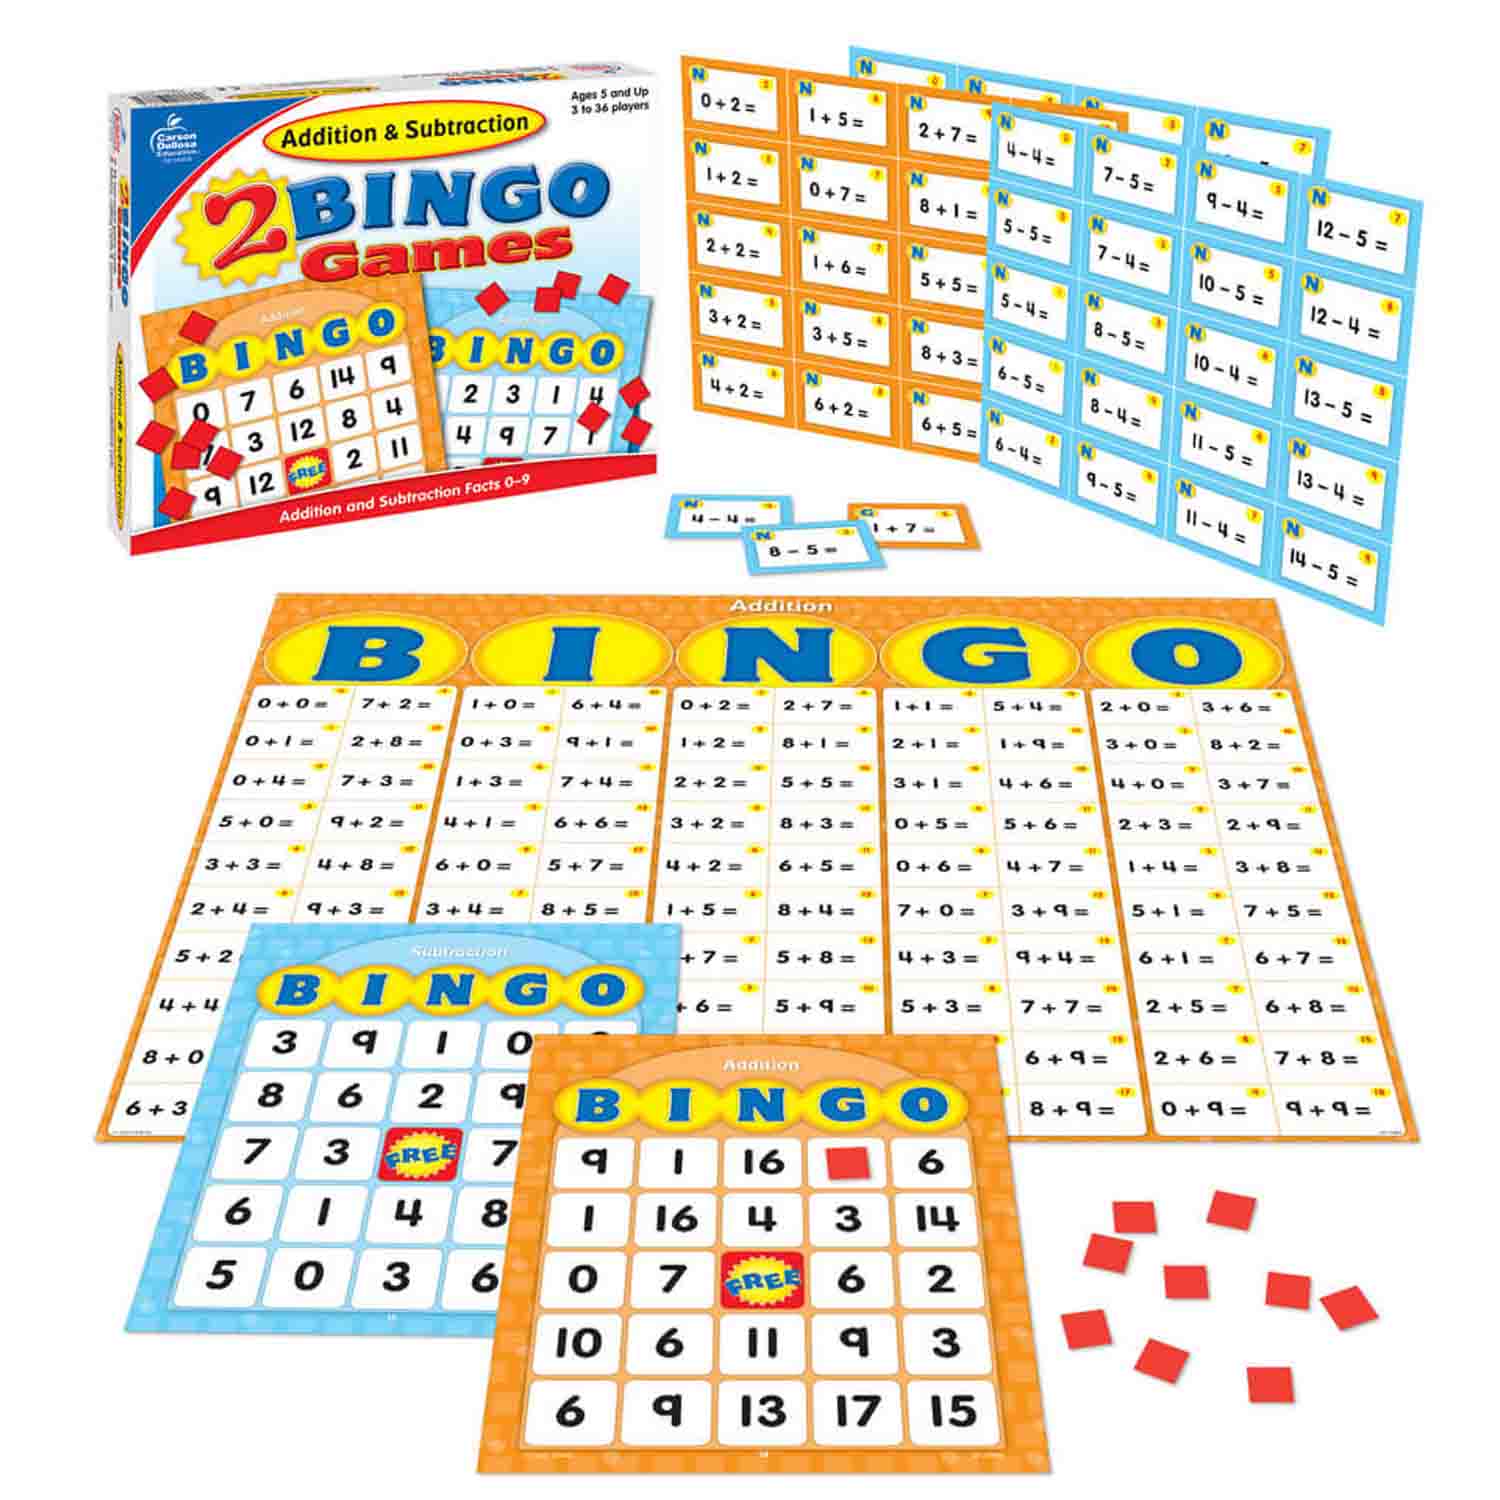 Addition & Subtraction Bingo Game